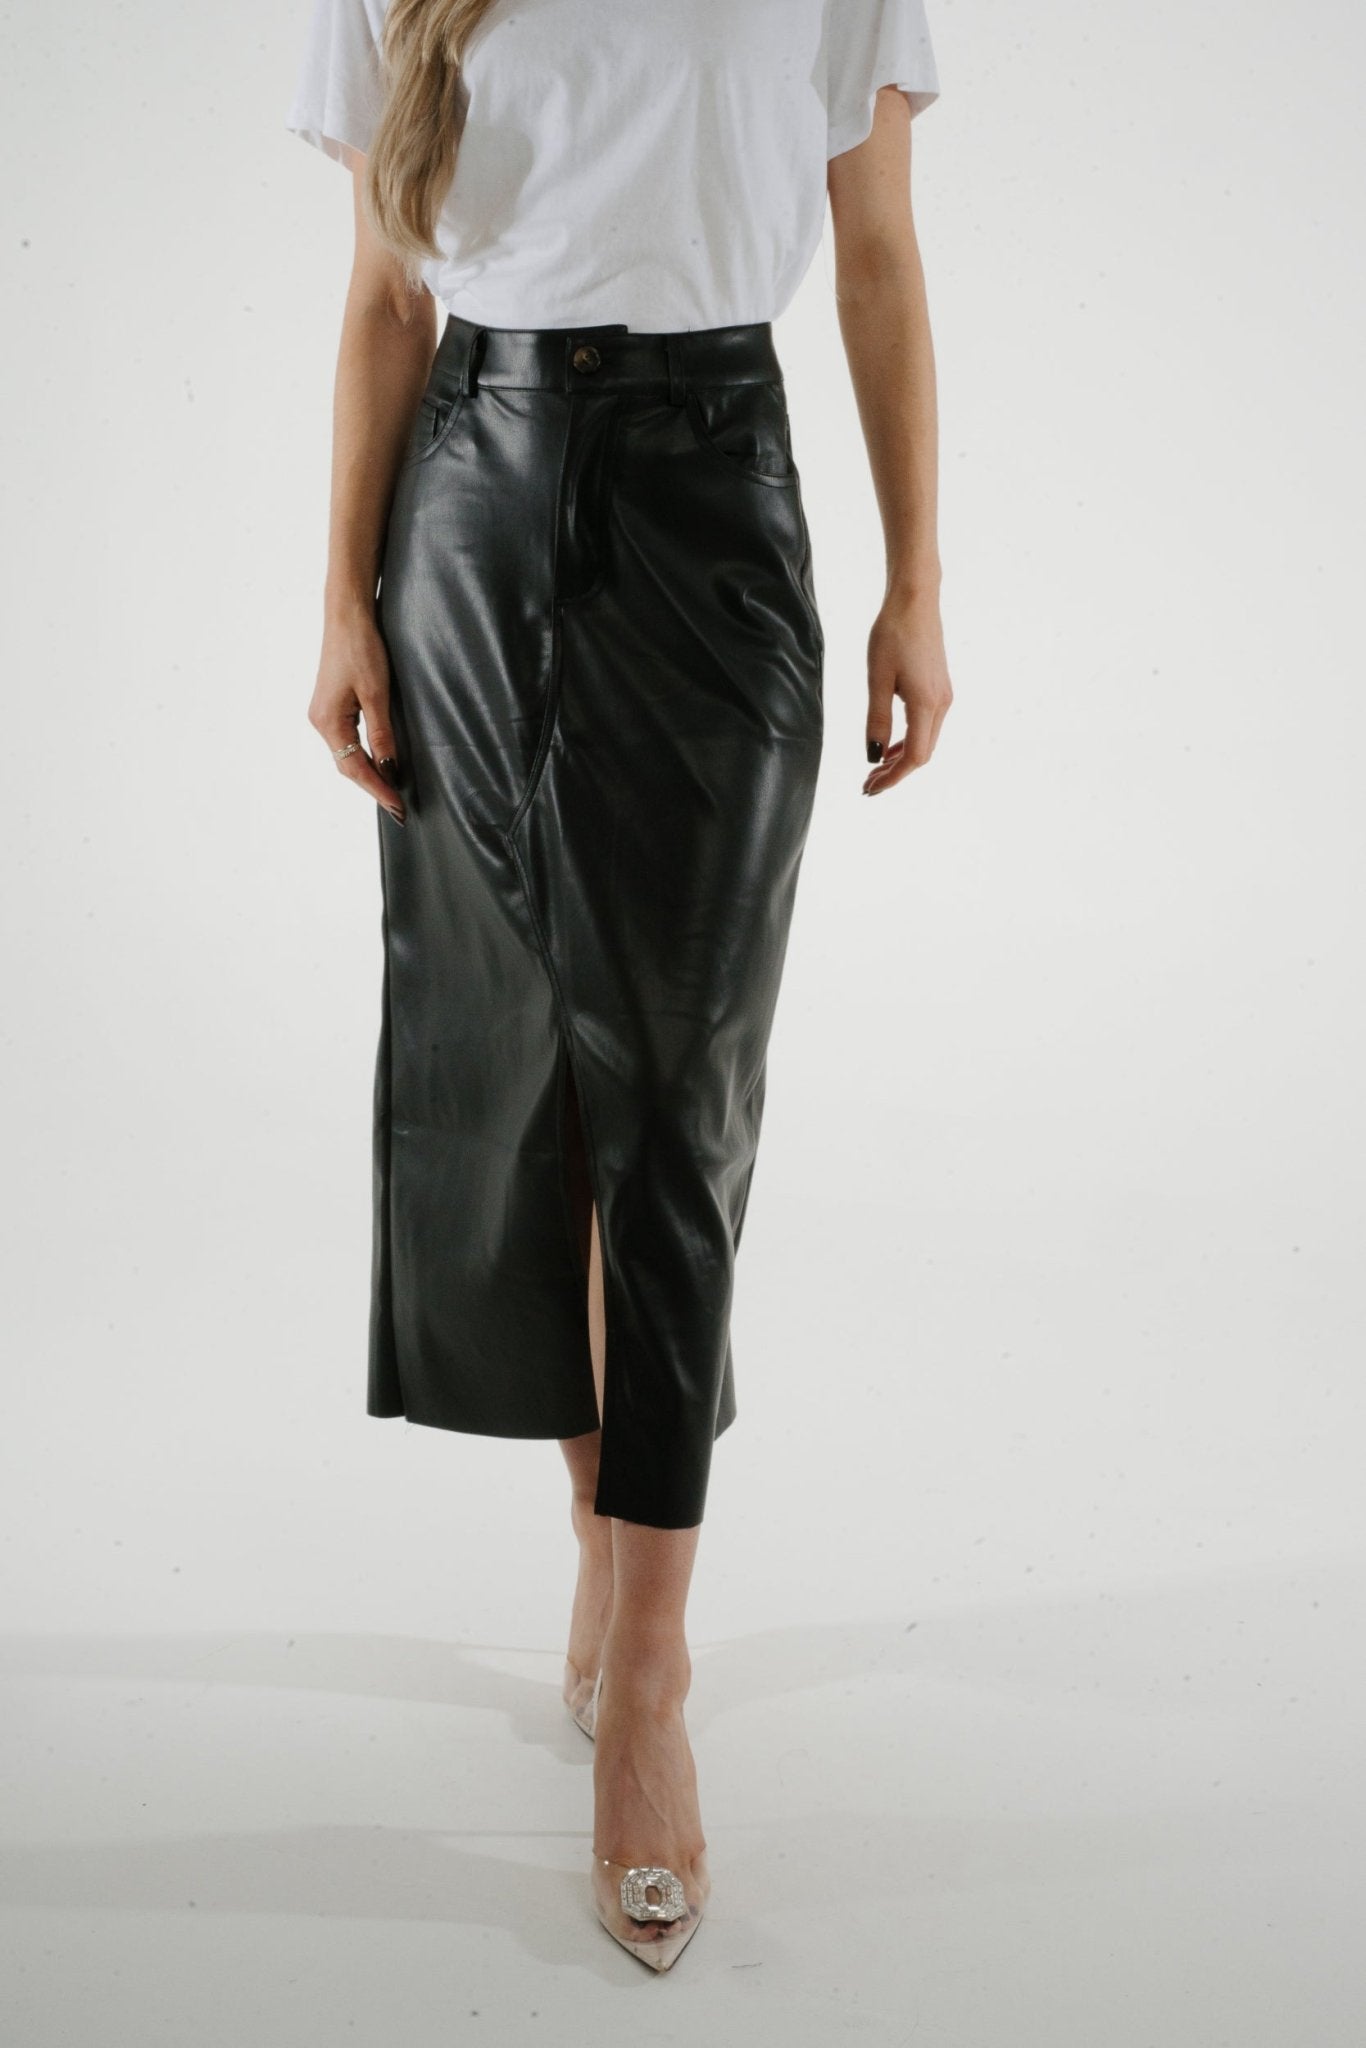 Jane Faux Leather Midi Skirt In Black - The Walk in Wardrobe